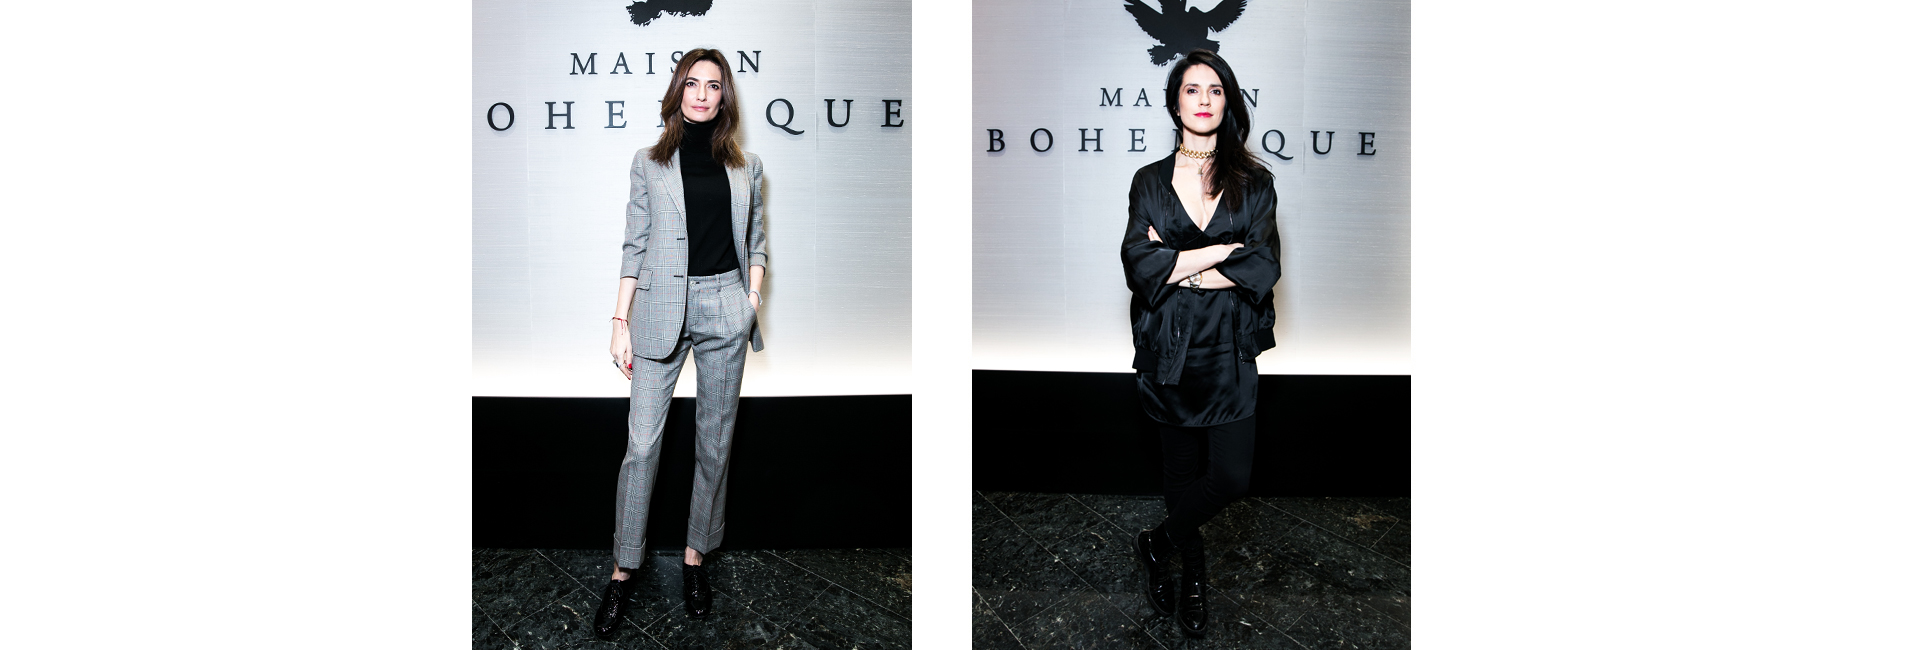 Maison Bohemique представил новую коллекцию Demi Couture (фото 5)